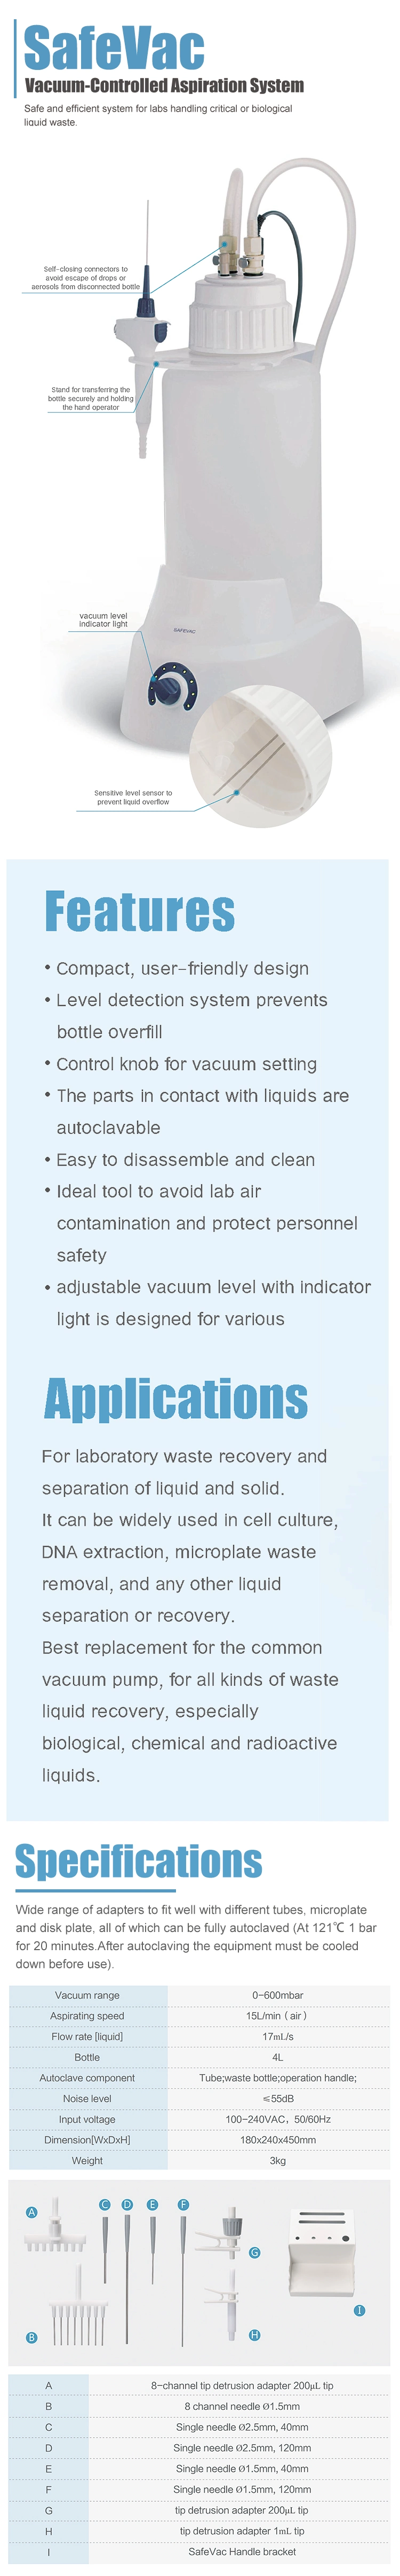 Vesta High Quality Laboratory Liquid Maintenance Safevac Vacuum Aspiration System 4L